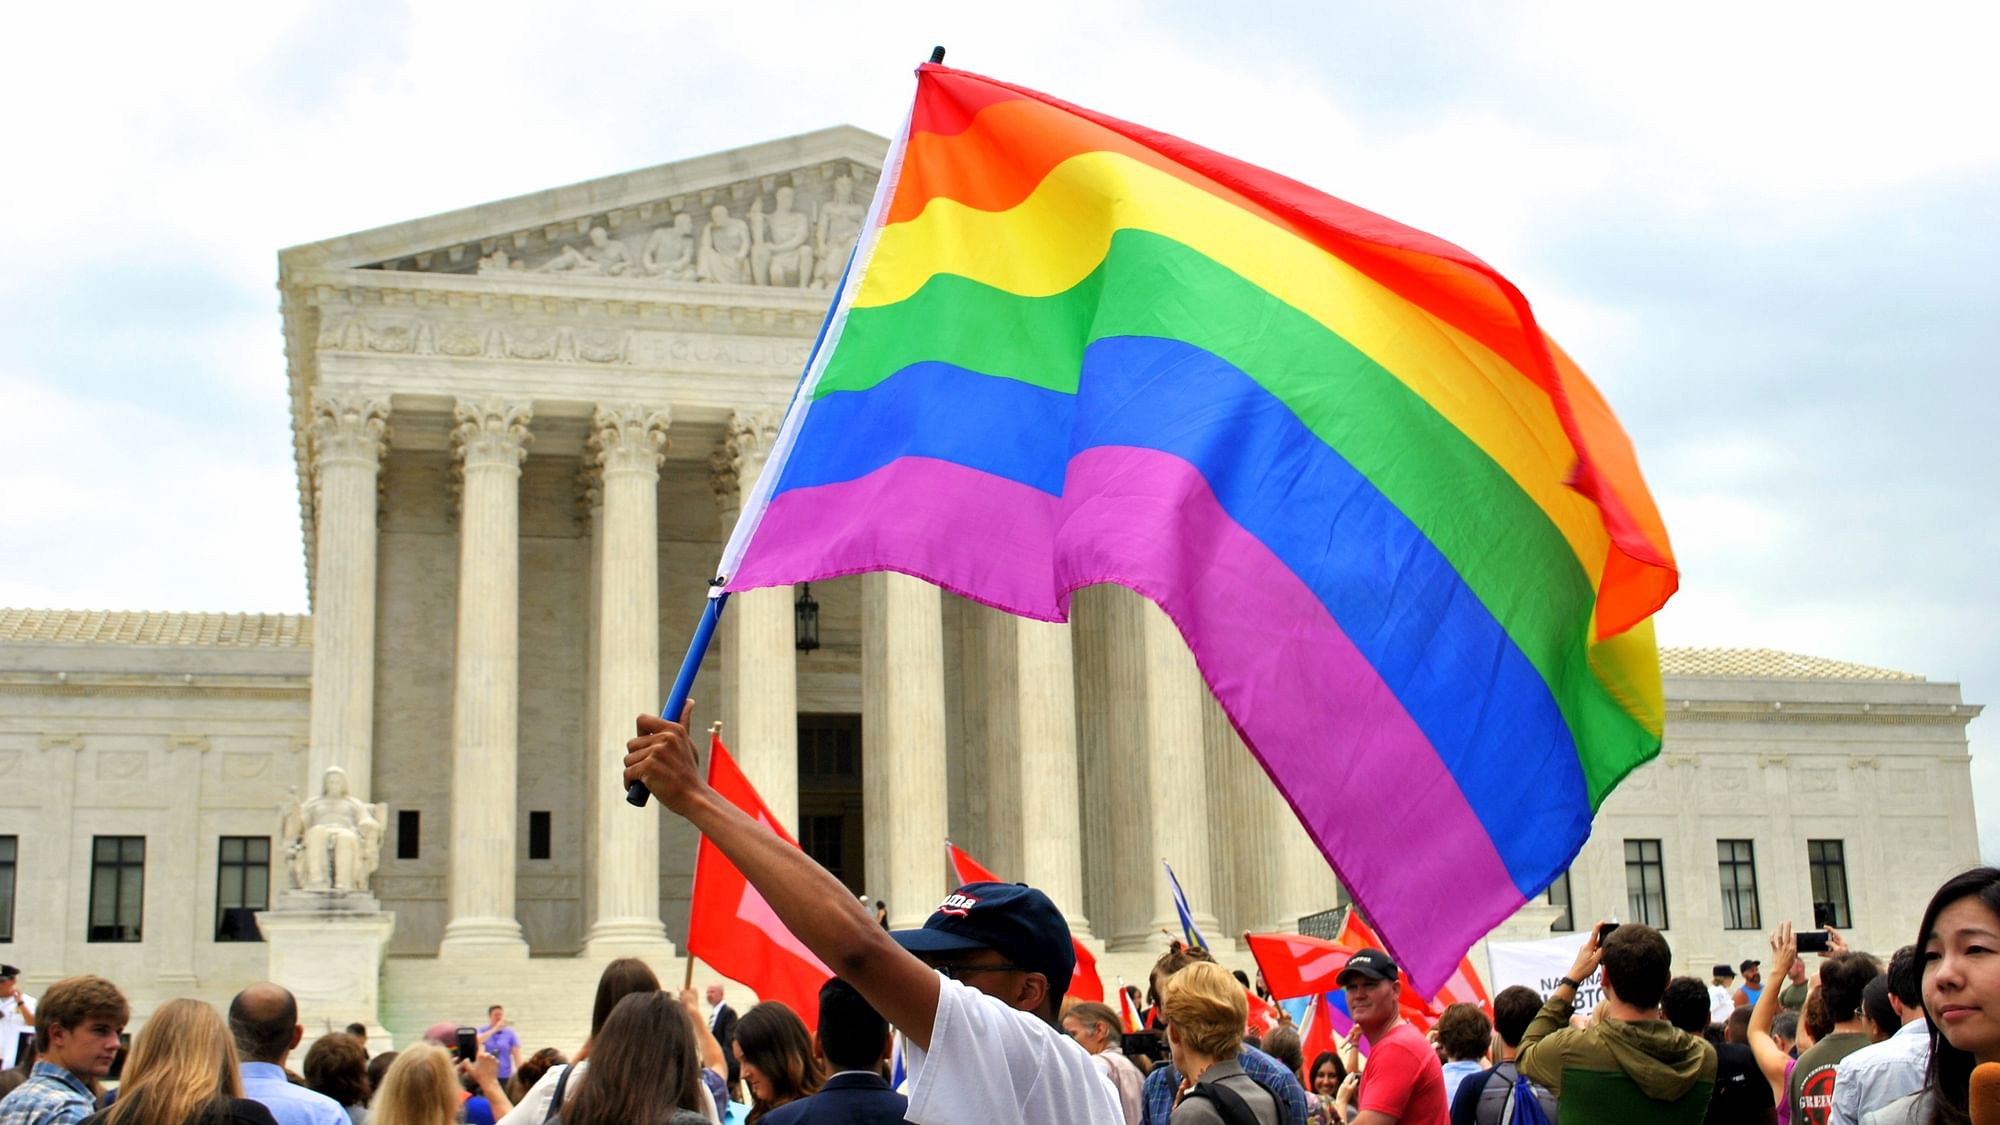 Same-sex marriage supporters celebrating the historic verdict in Washington, D.C. (Photo: Anita Komuves)